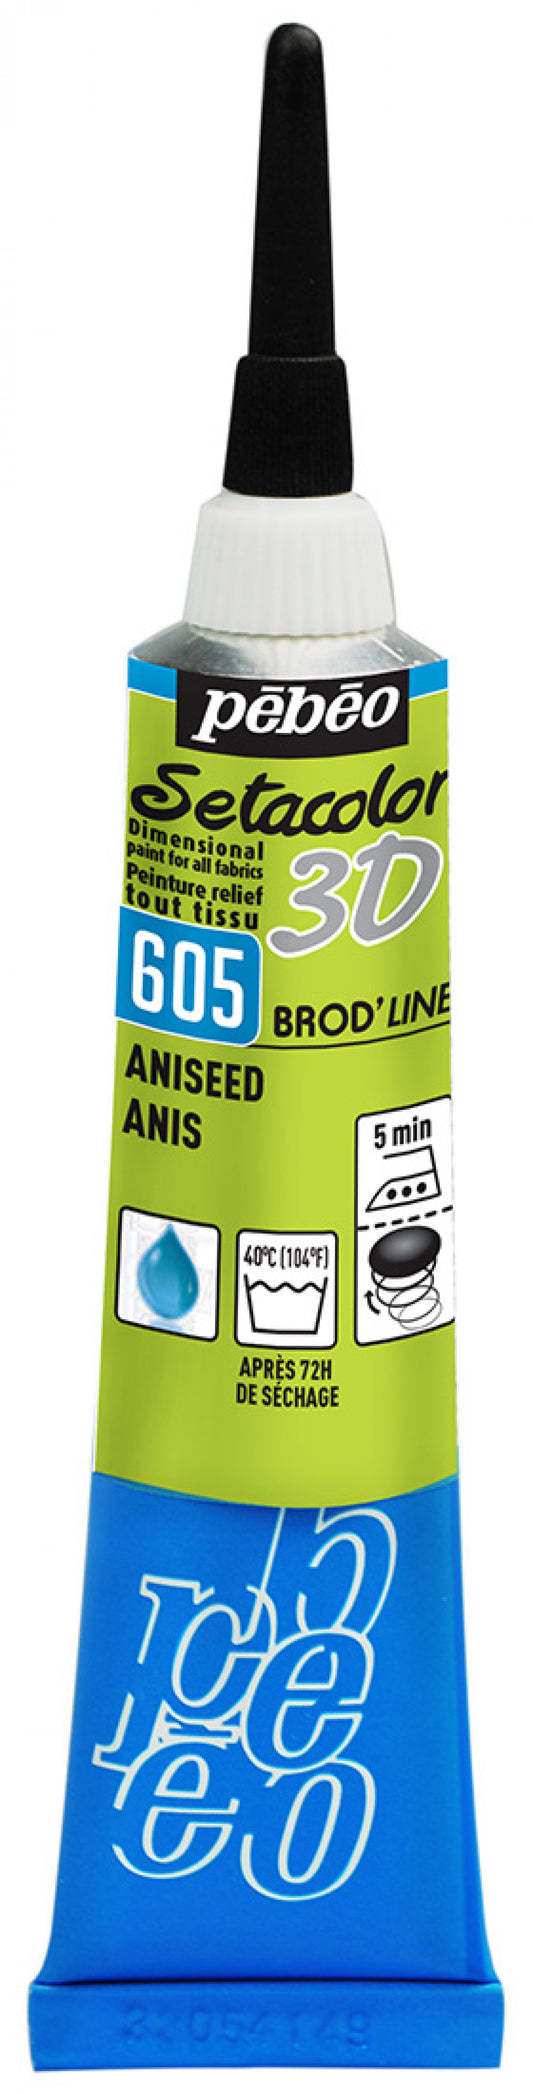 Setacolor 3D Brod'Line Col. 605 Anise**